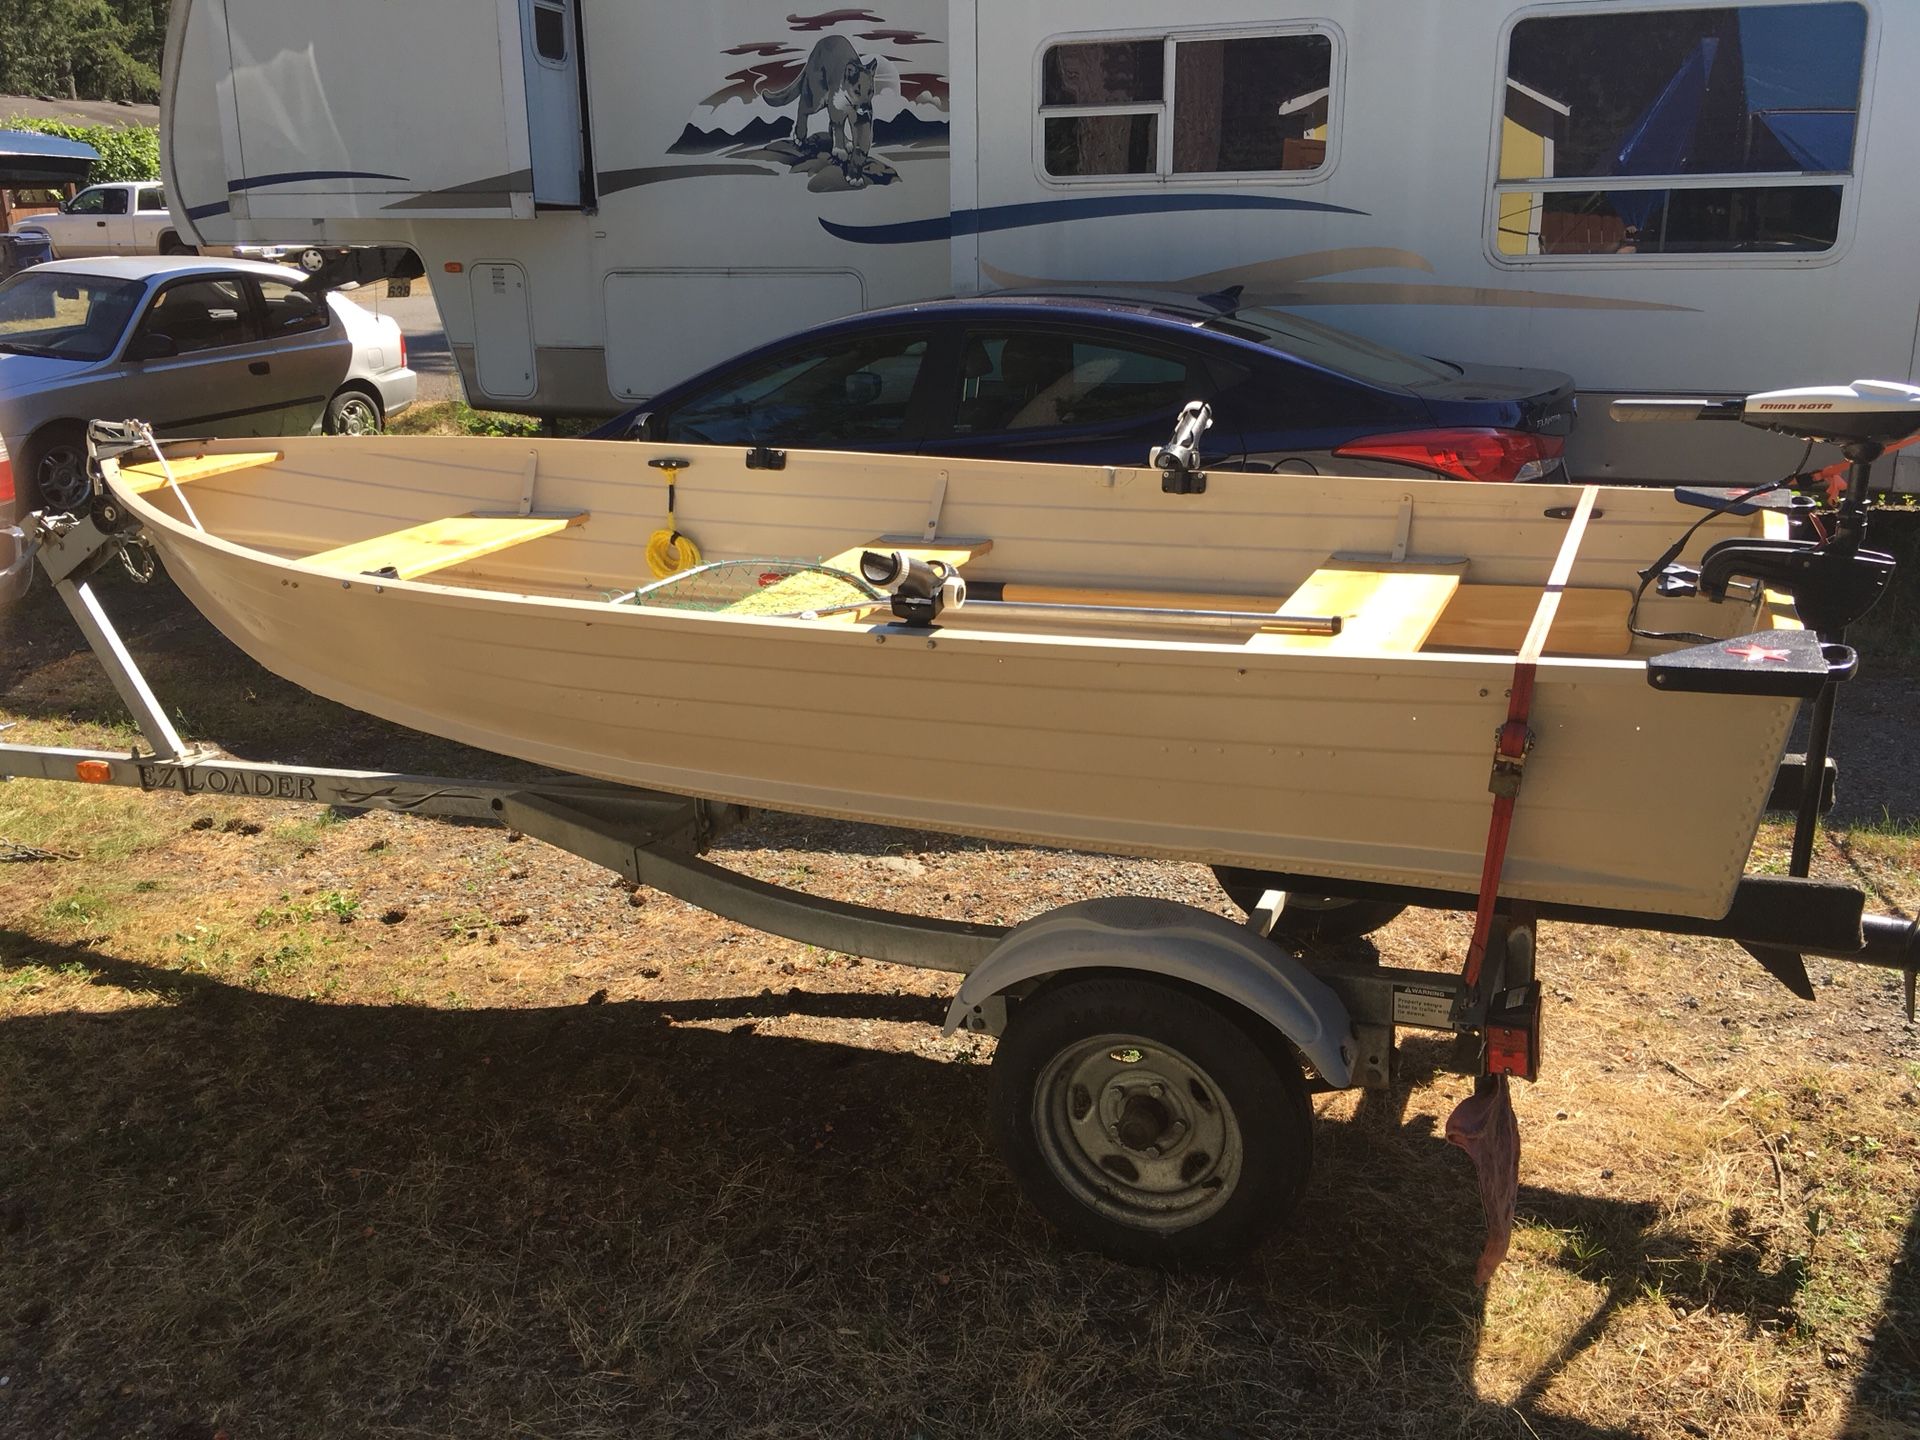 12 foot aluminum boat and easy loader trailer